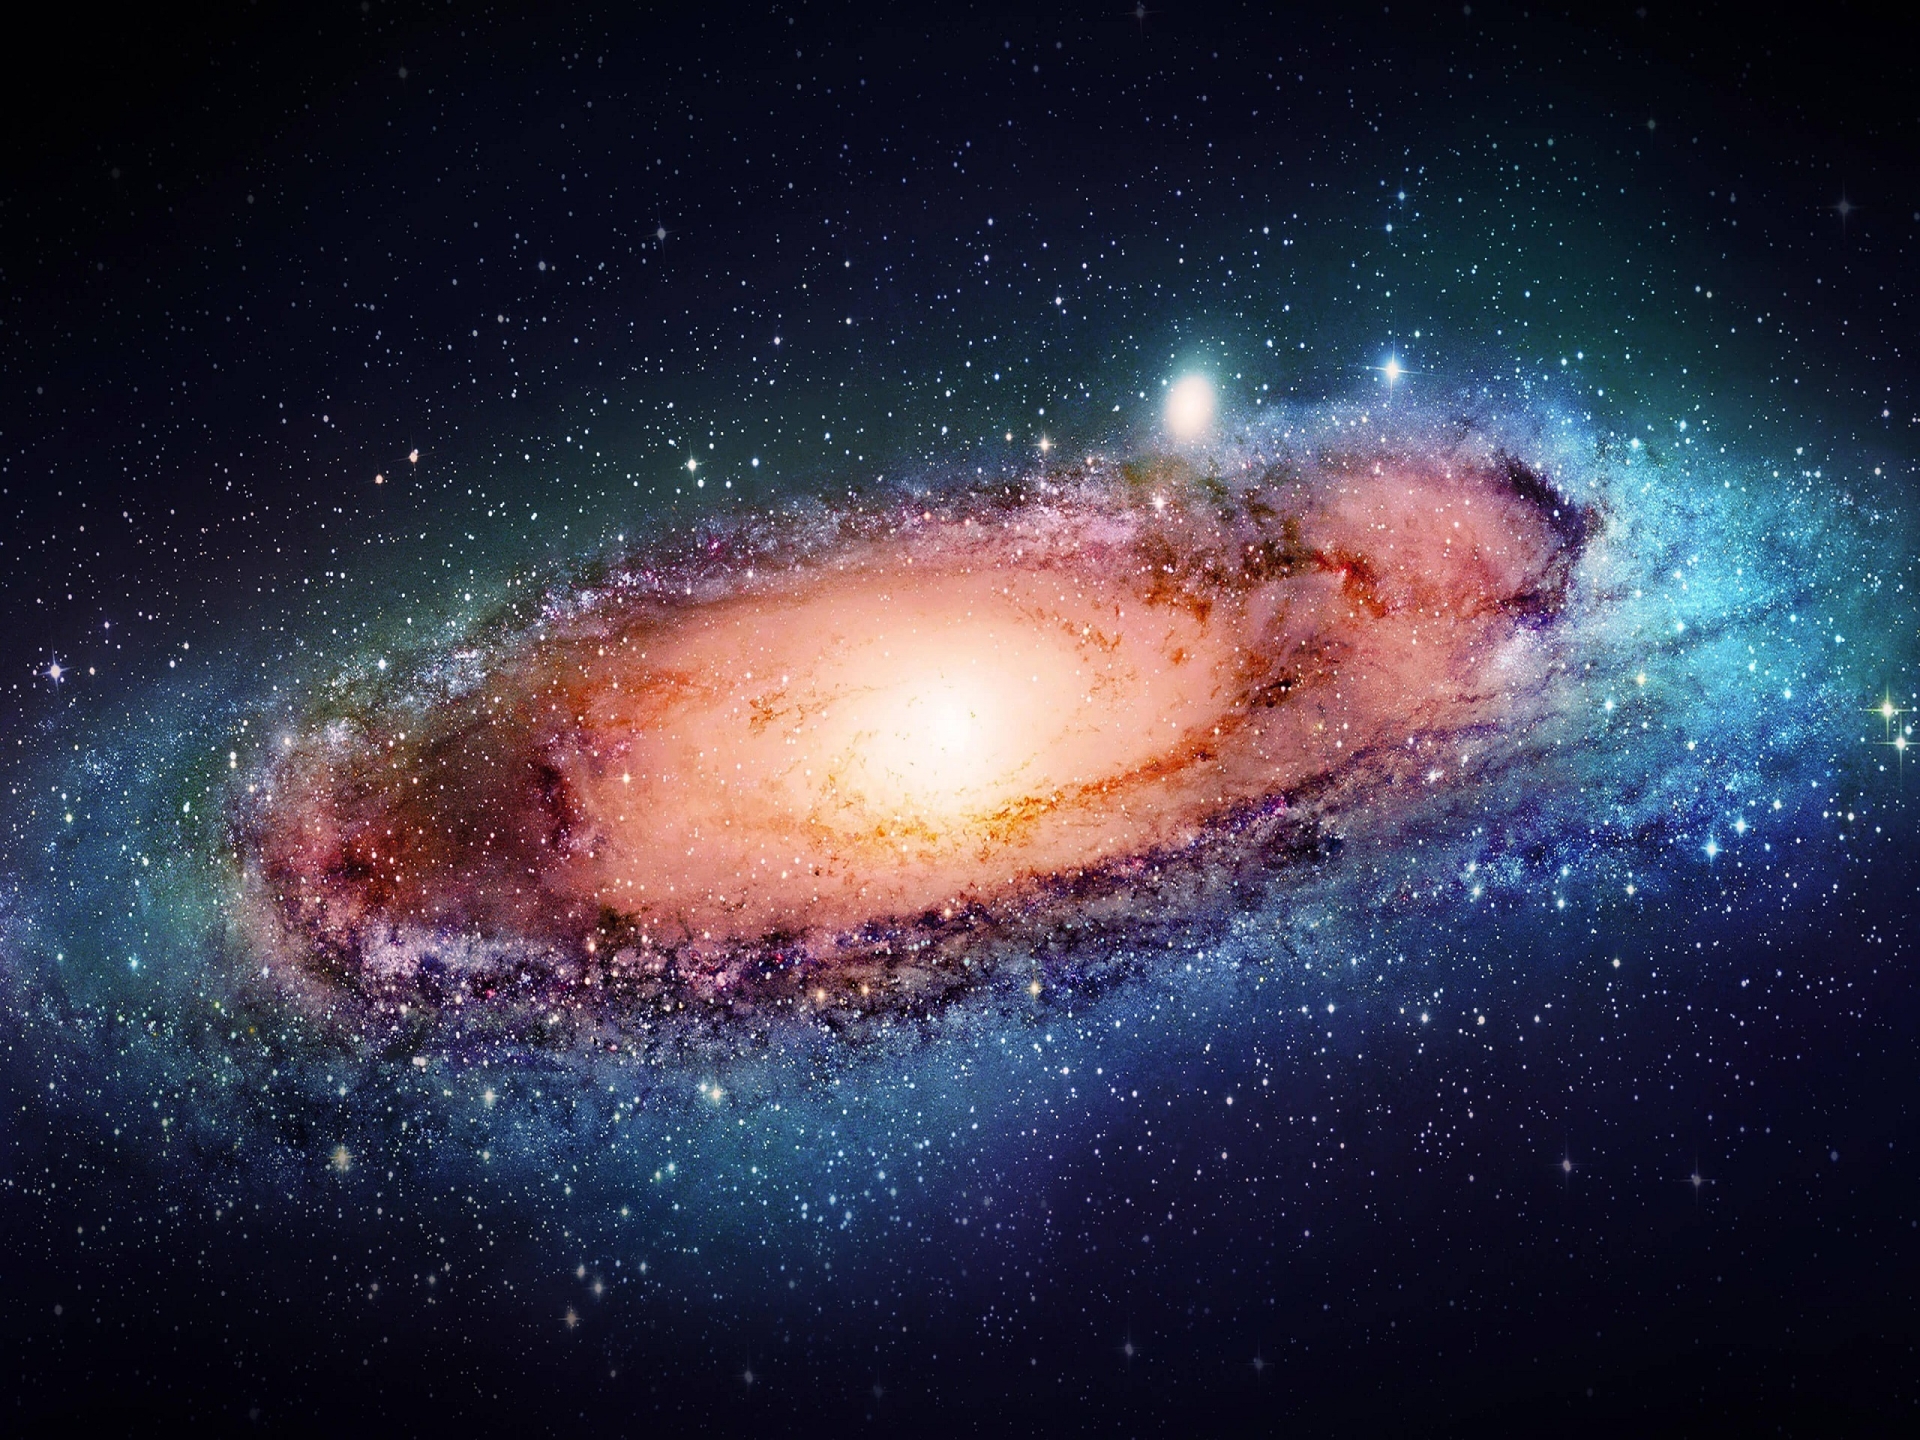 Milky Way Galaxy for 1920 x 1440 resolution